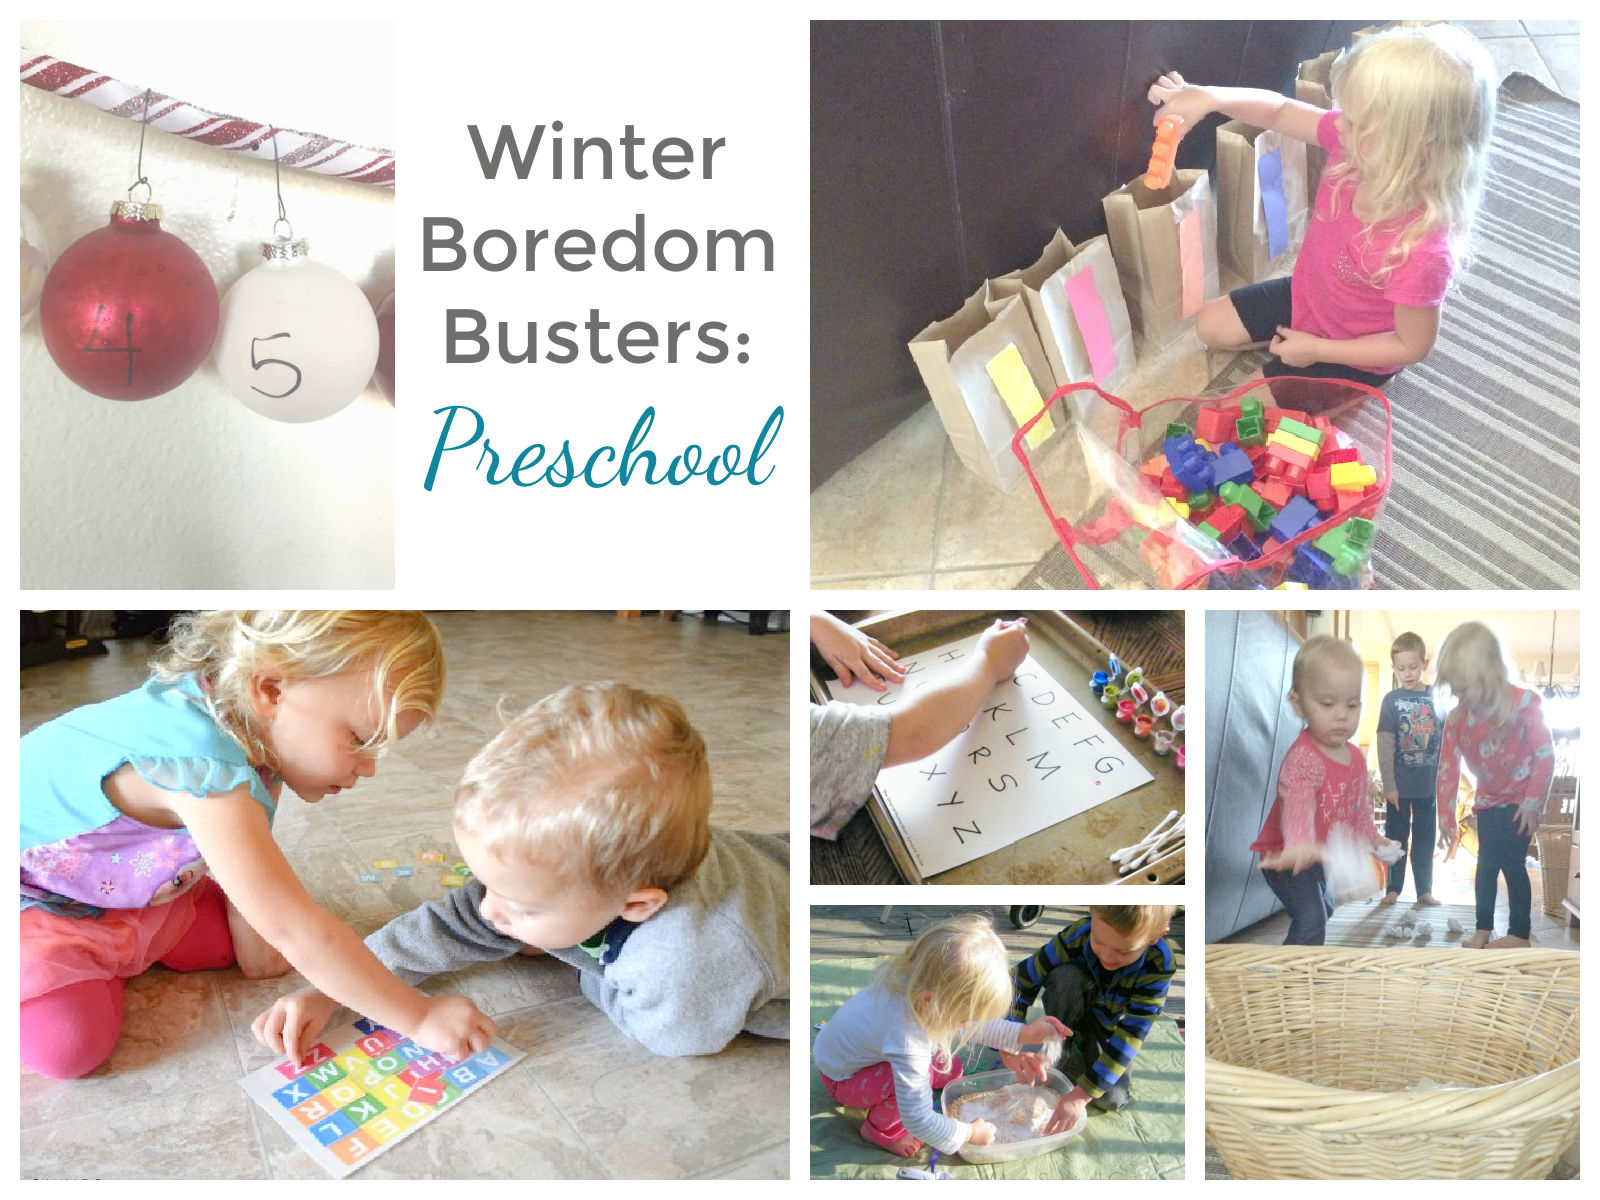 Winter Boredom Busters for Preschool